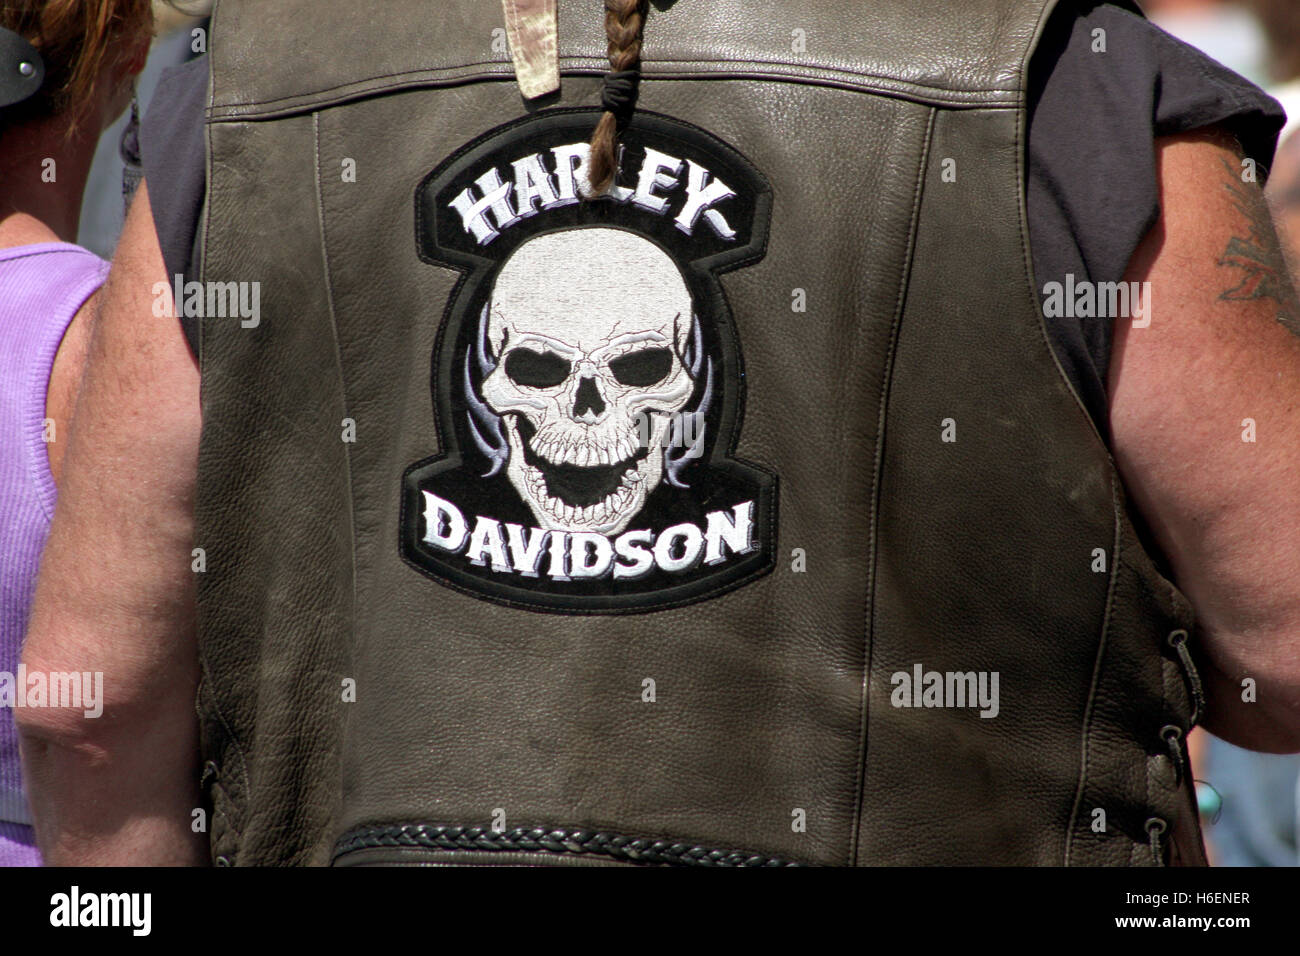 Skull design on back of Harley Davidson motorcycle vest worn by man Stock Photo